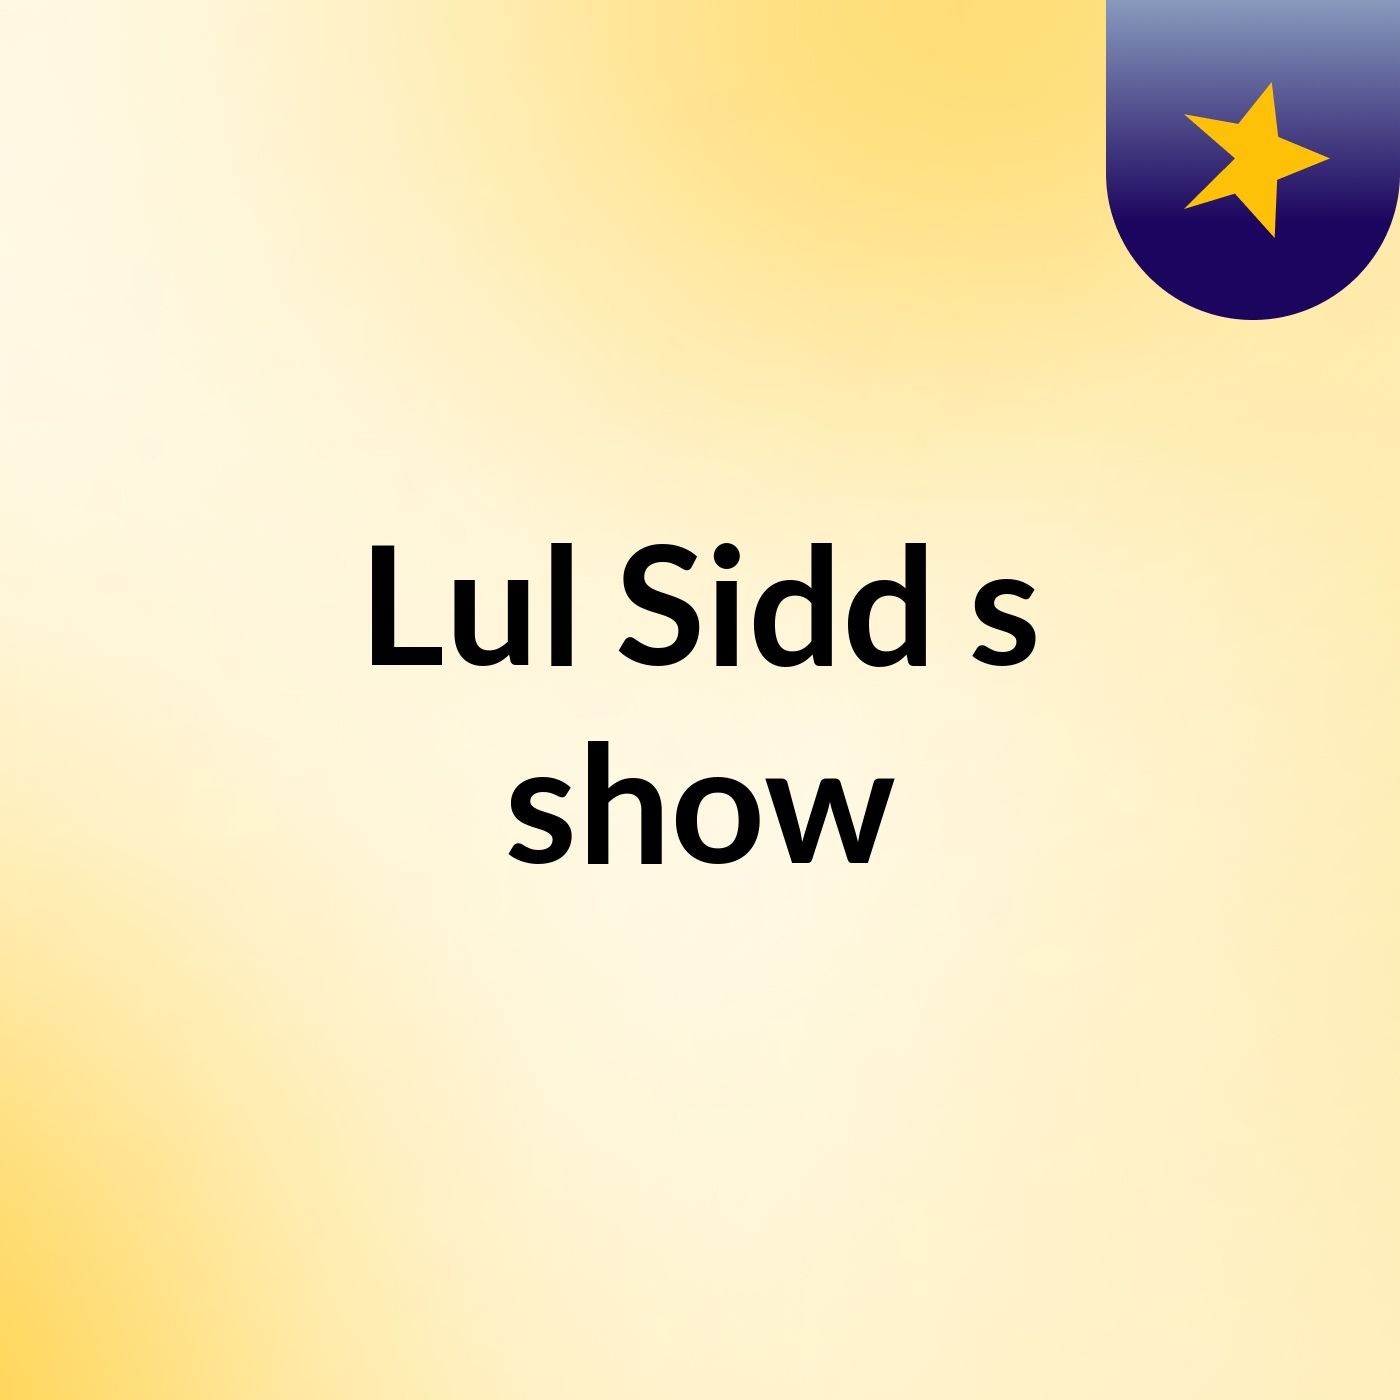 Lul Sidd's show